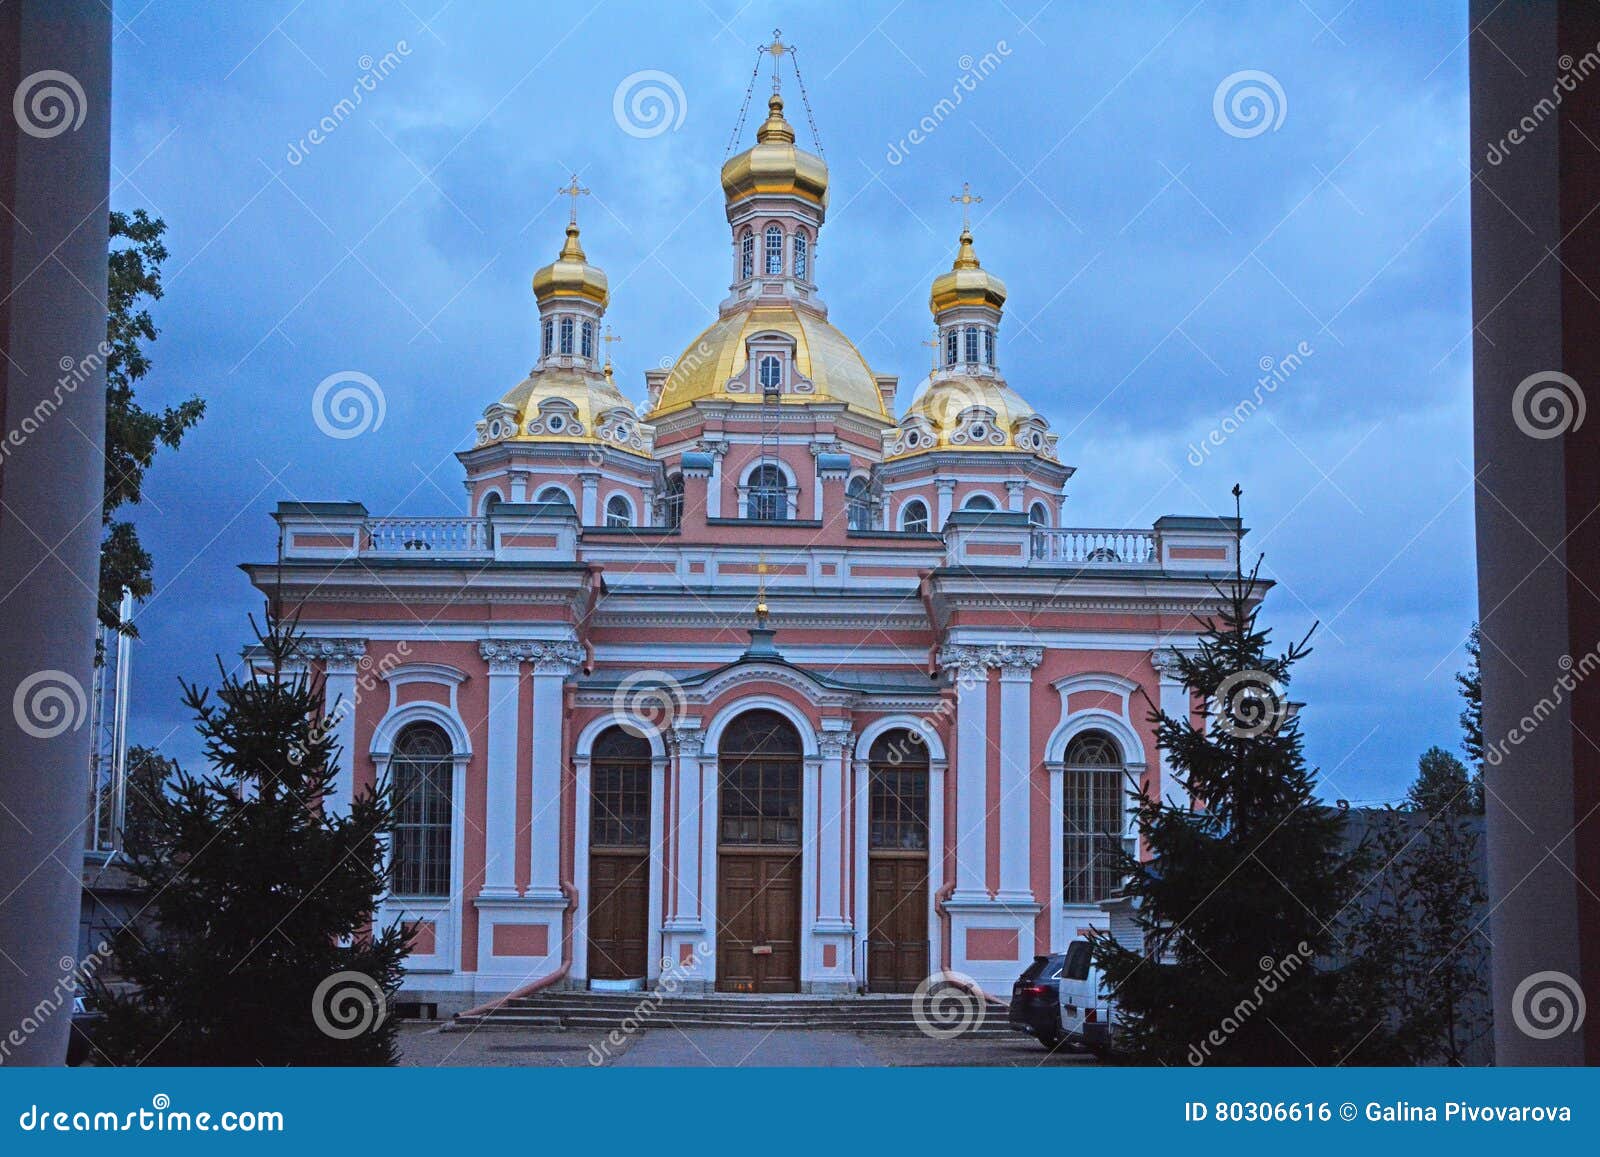 krestovozdvizhensky cossack cathedral in saint petersburg, russia